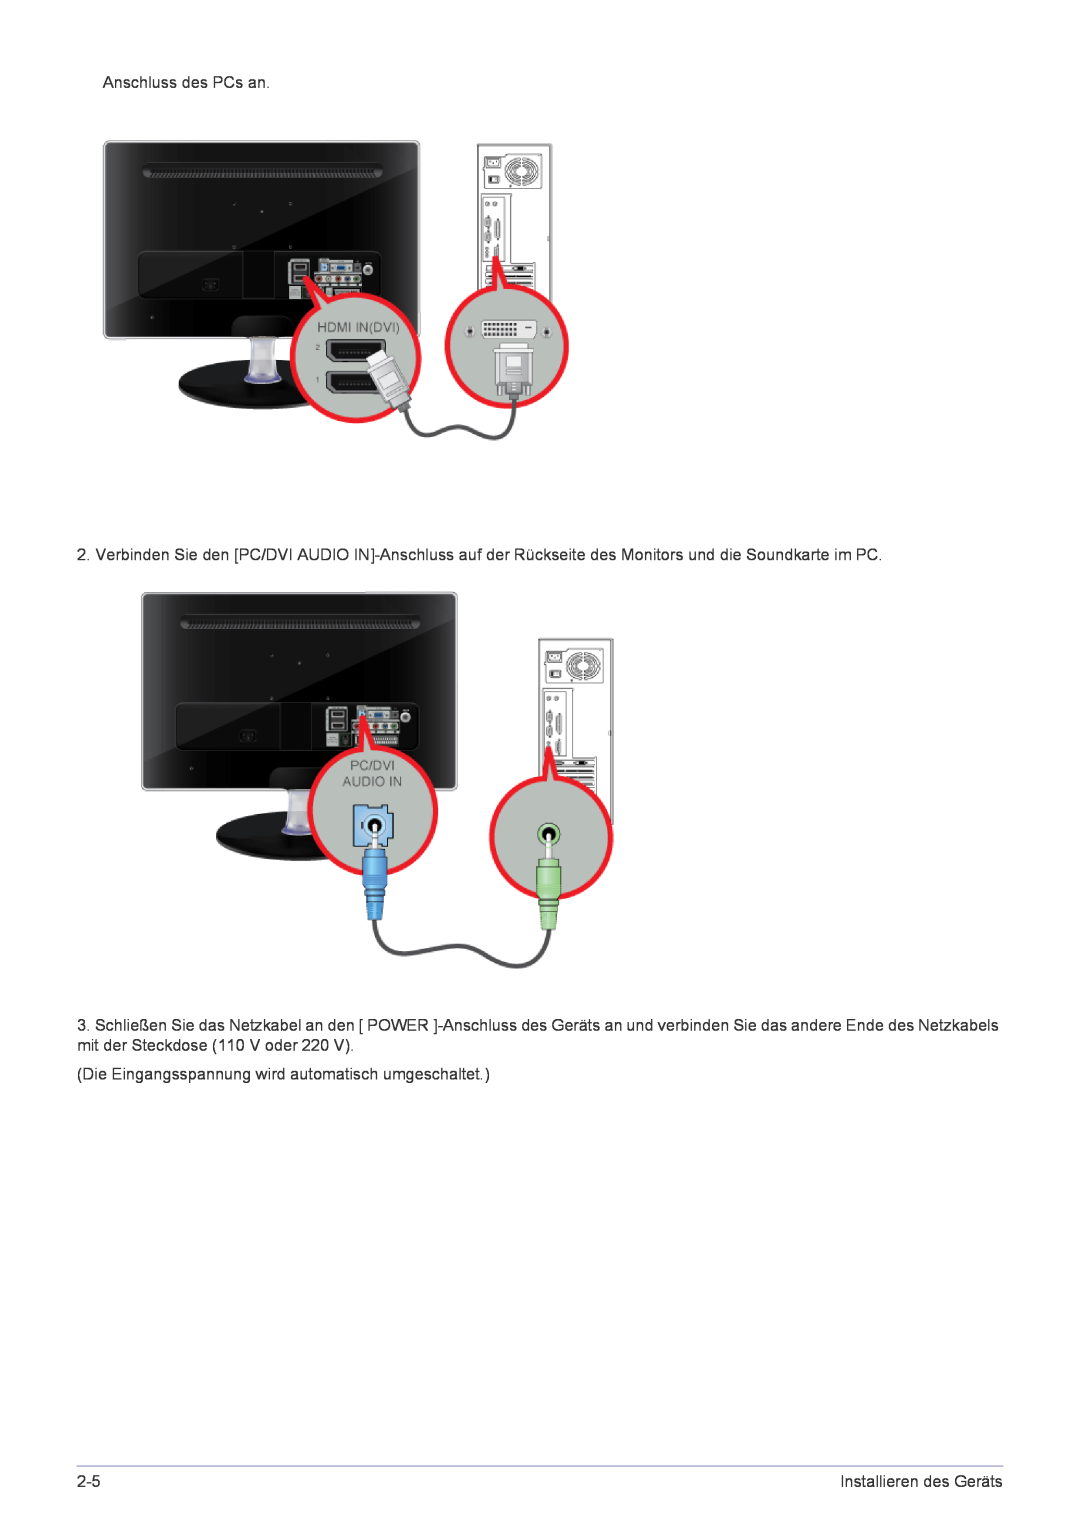 Samsung LS24EMLKF/EN Anschluss des PCs an, Die Eingangsspannung wird automatisch umgeschaltet, Installieren des Geräts 